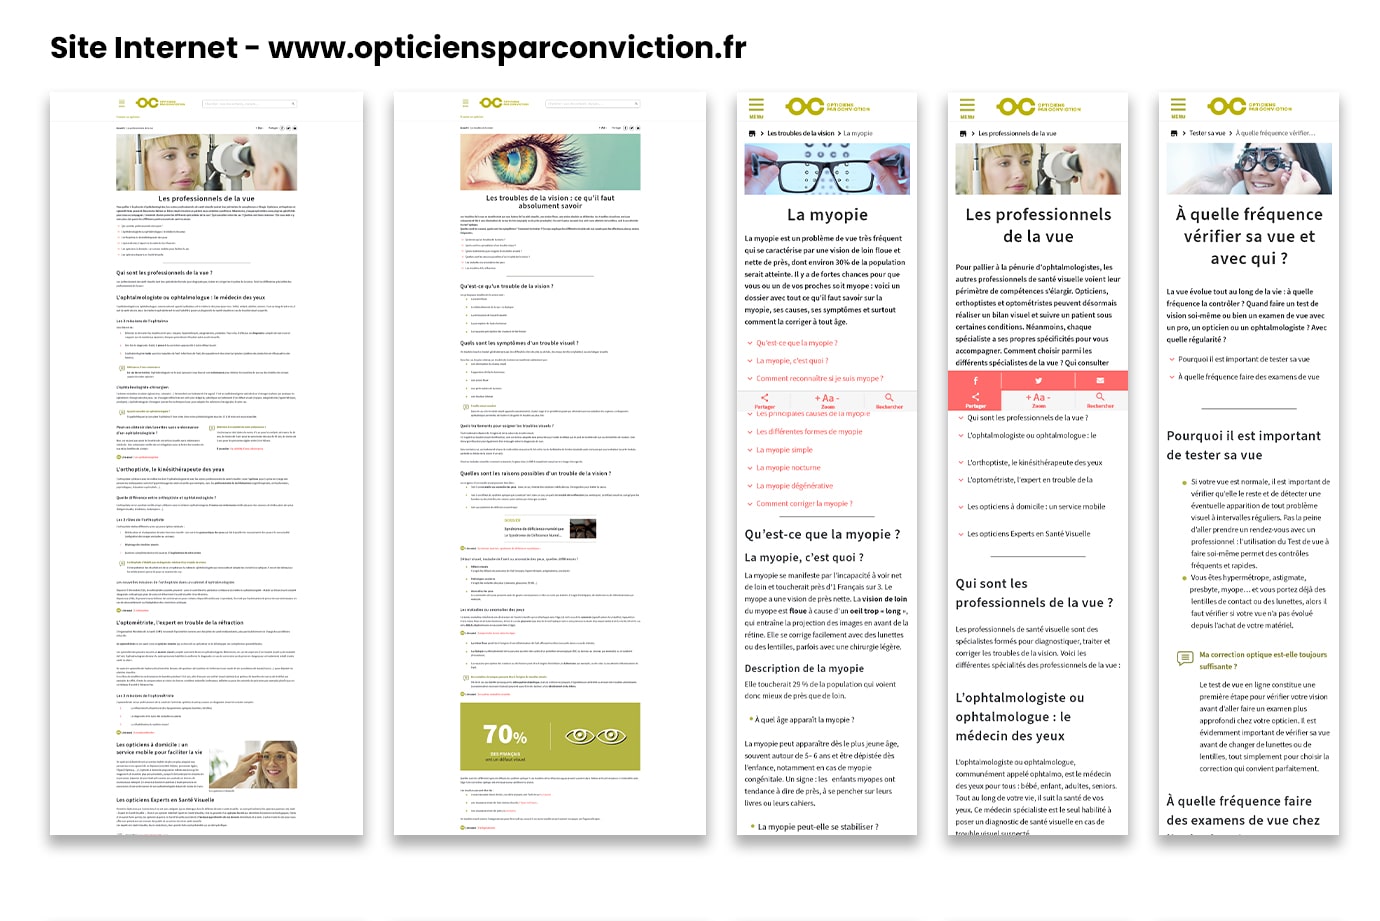 Site Internet opticiensparconviction.fr onclick